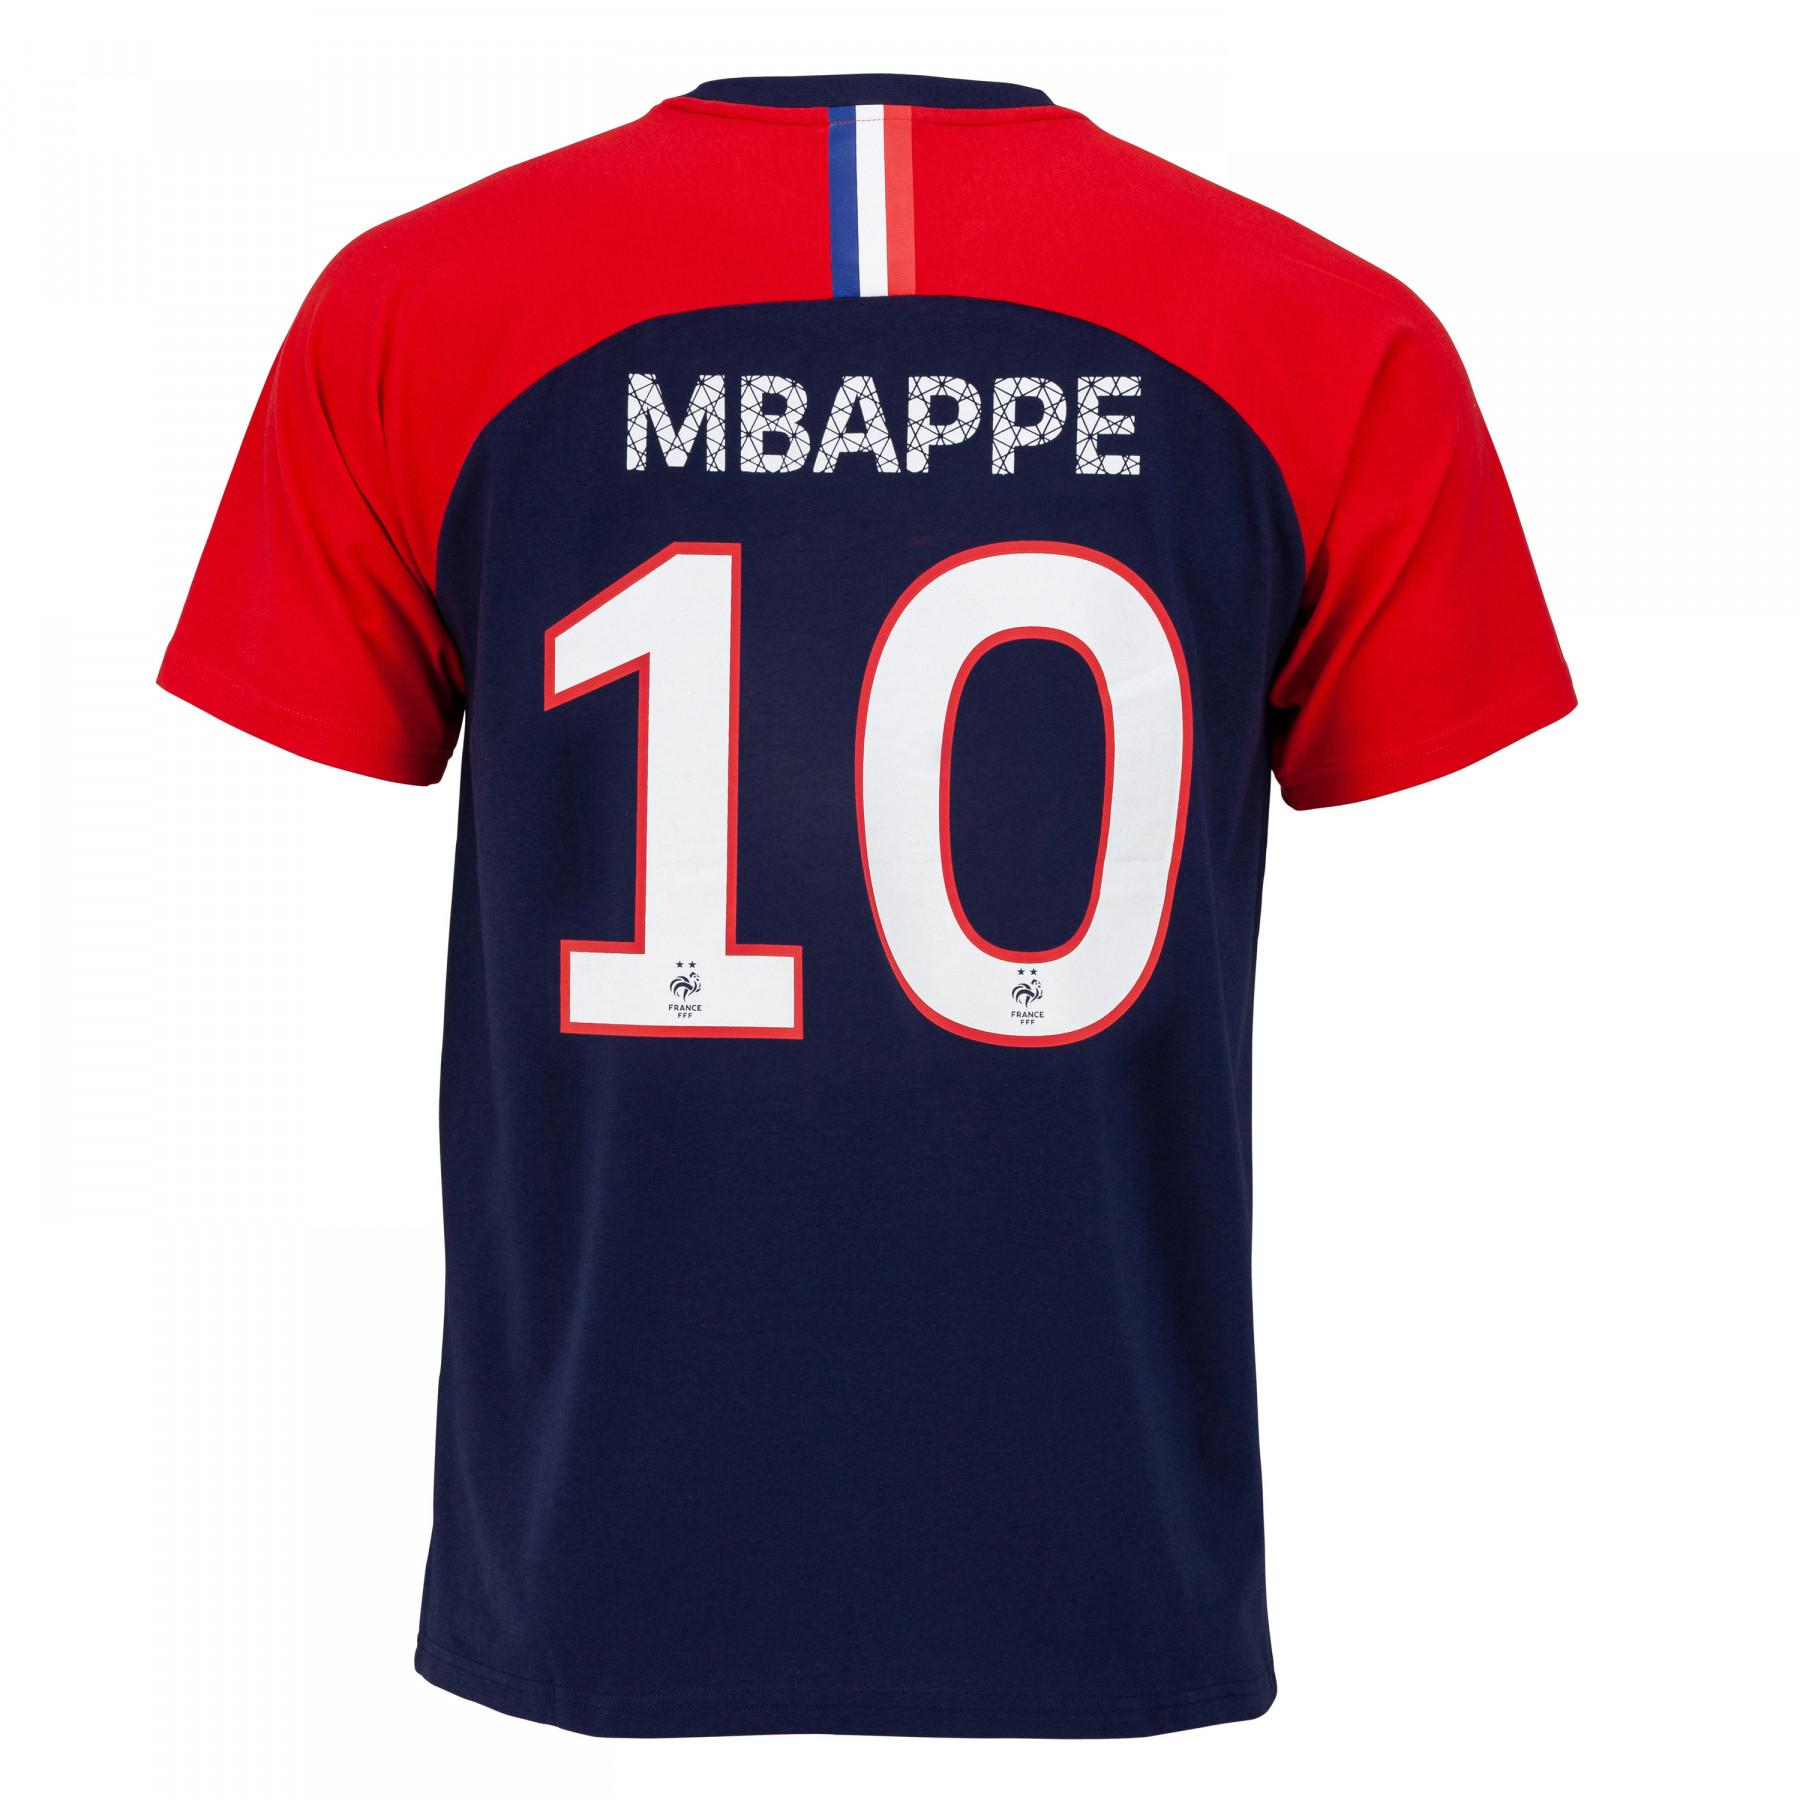 T-shirt criança FFF Player Mbappé N°10 criança